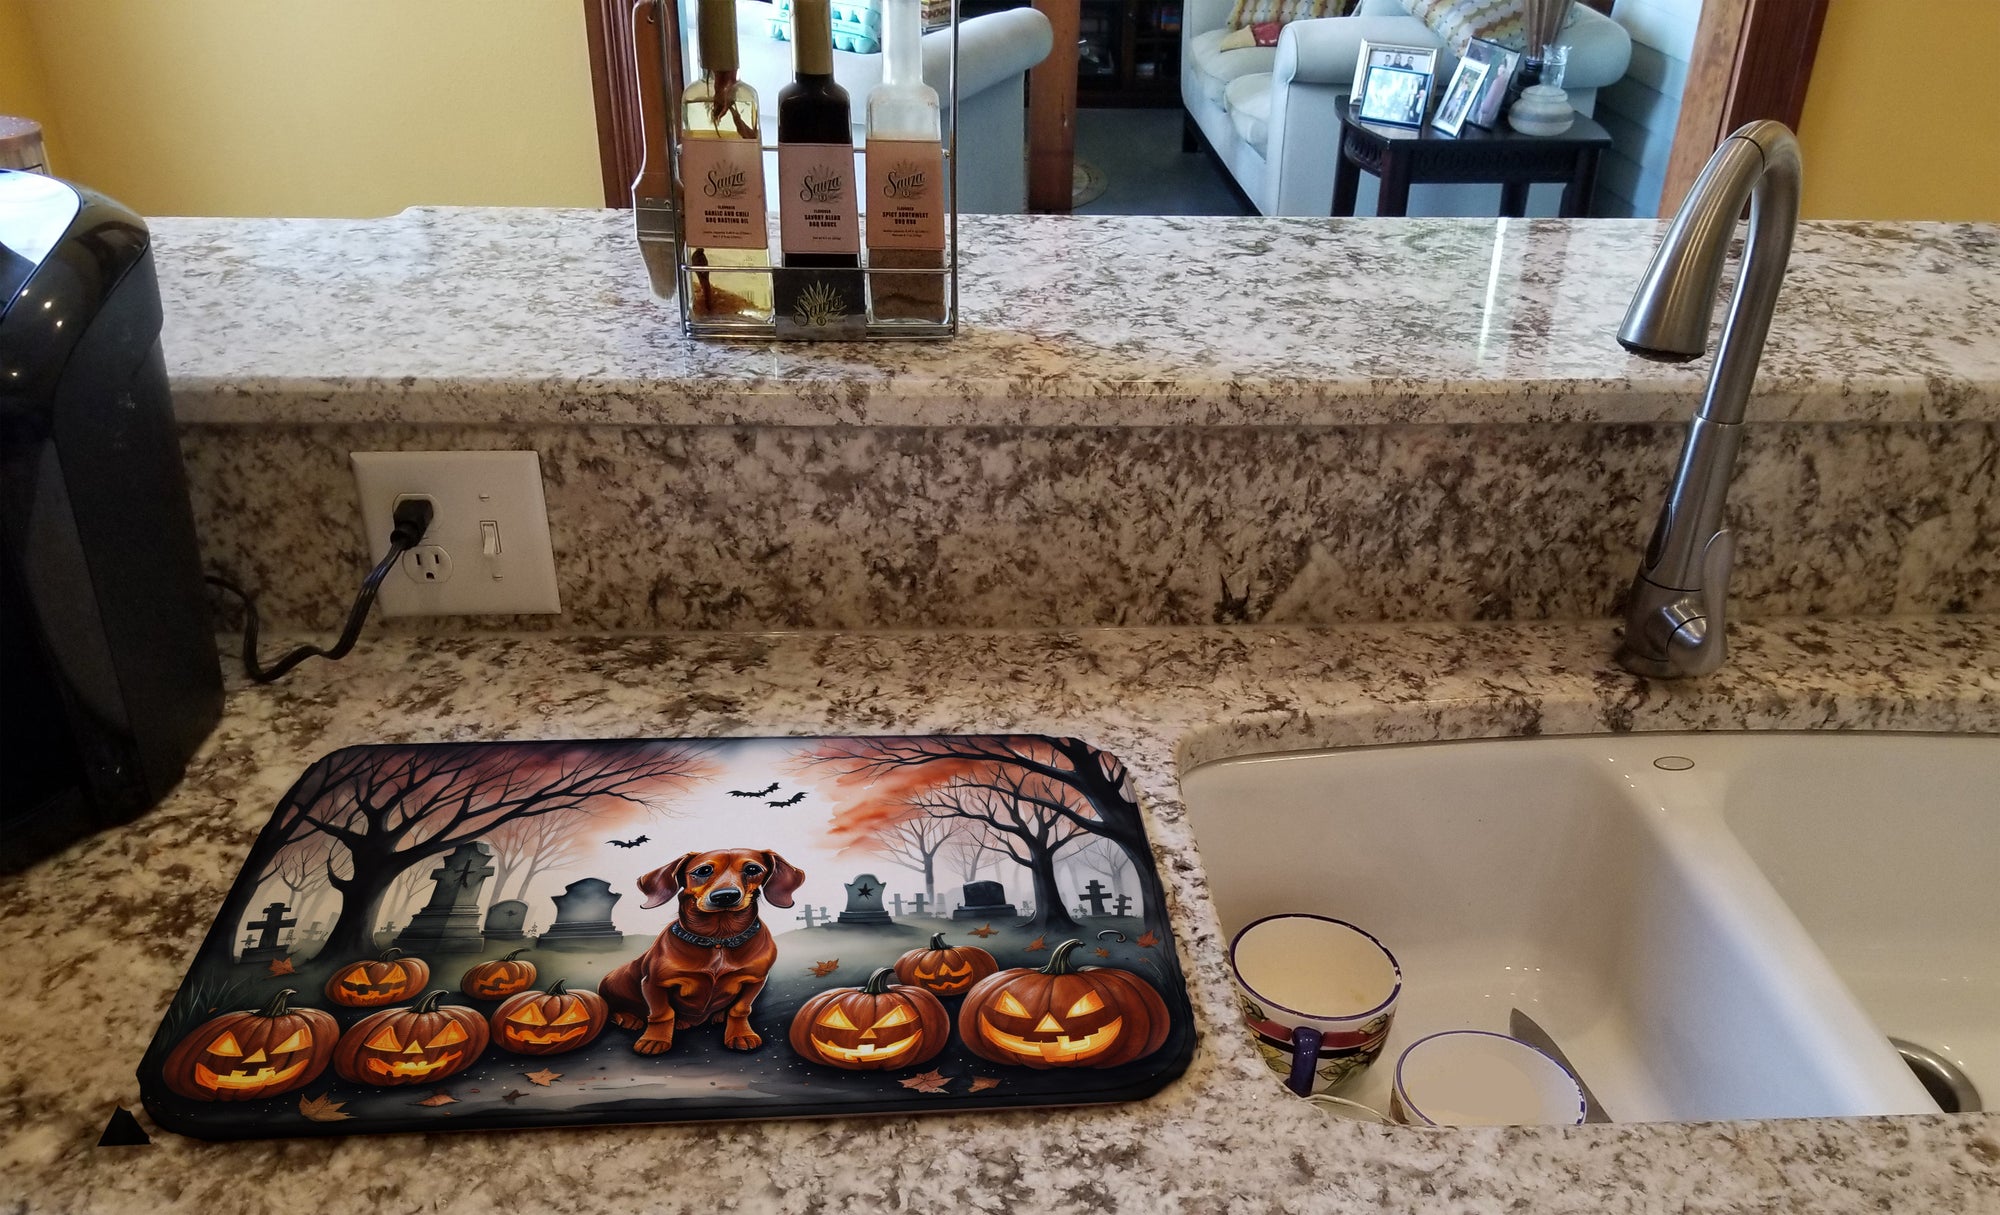 Buy this Dachshund Spooky Halloween Dish Drying Mat